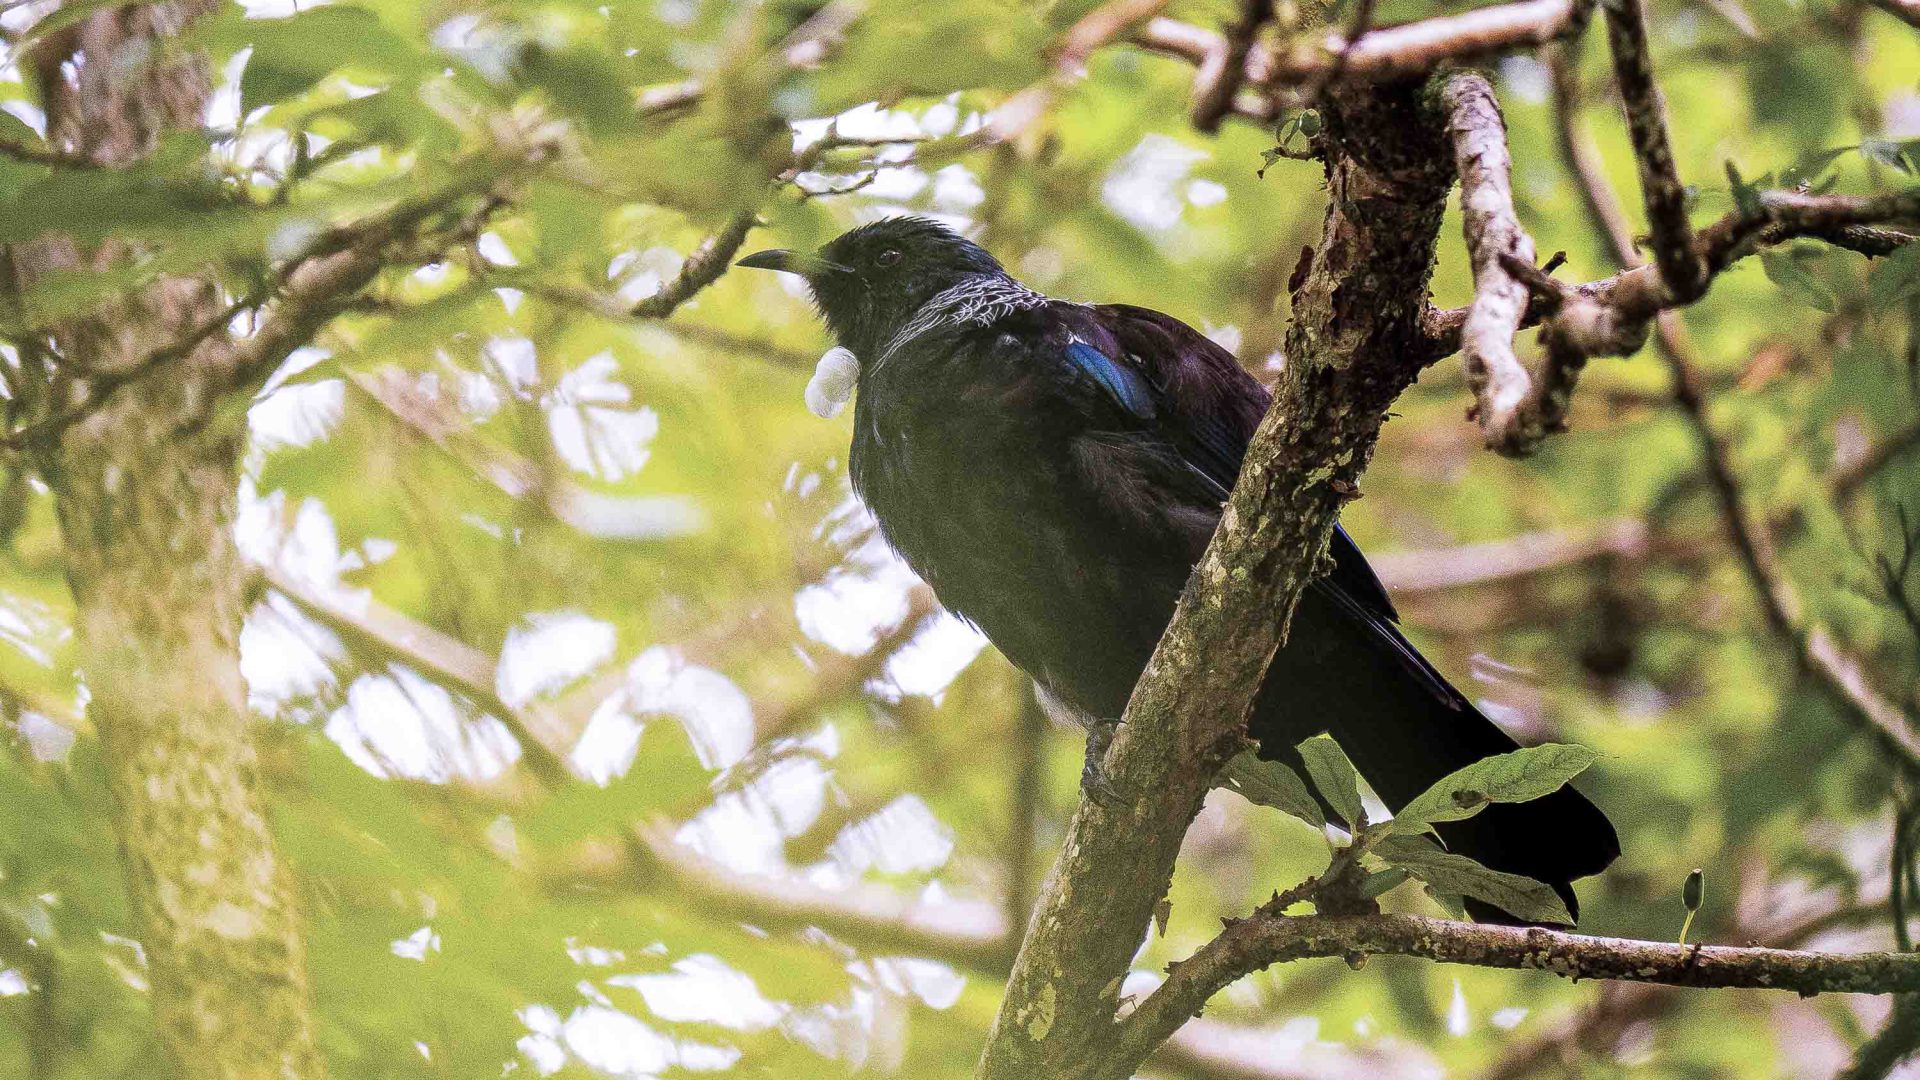 A black tui bird sits on a branch.